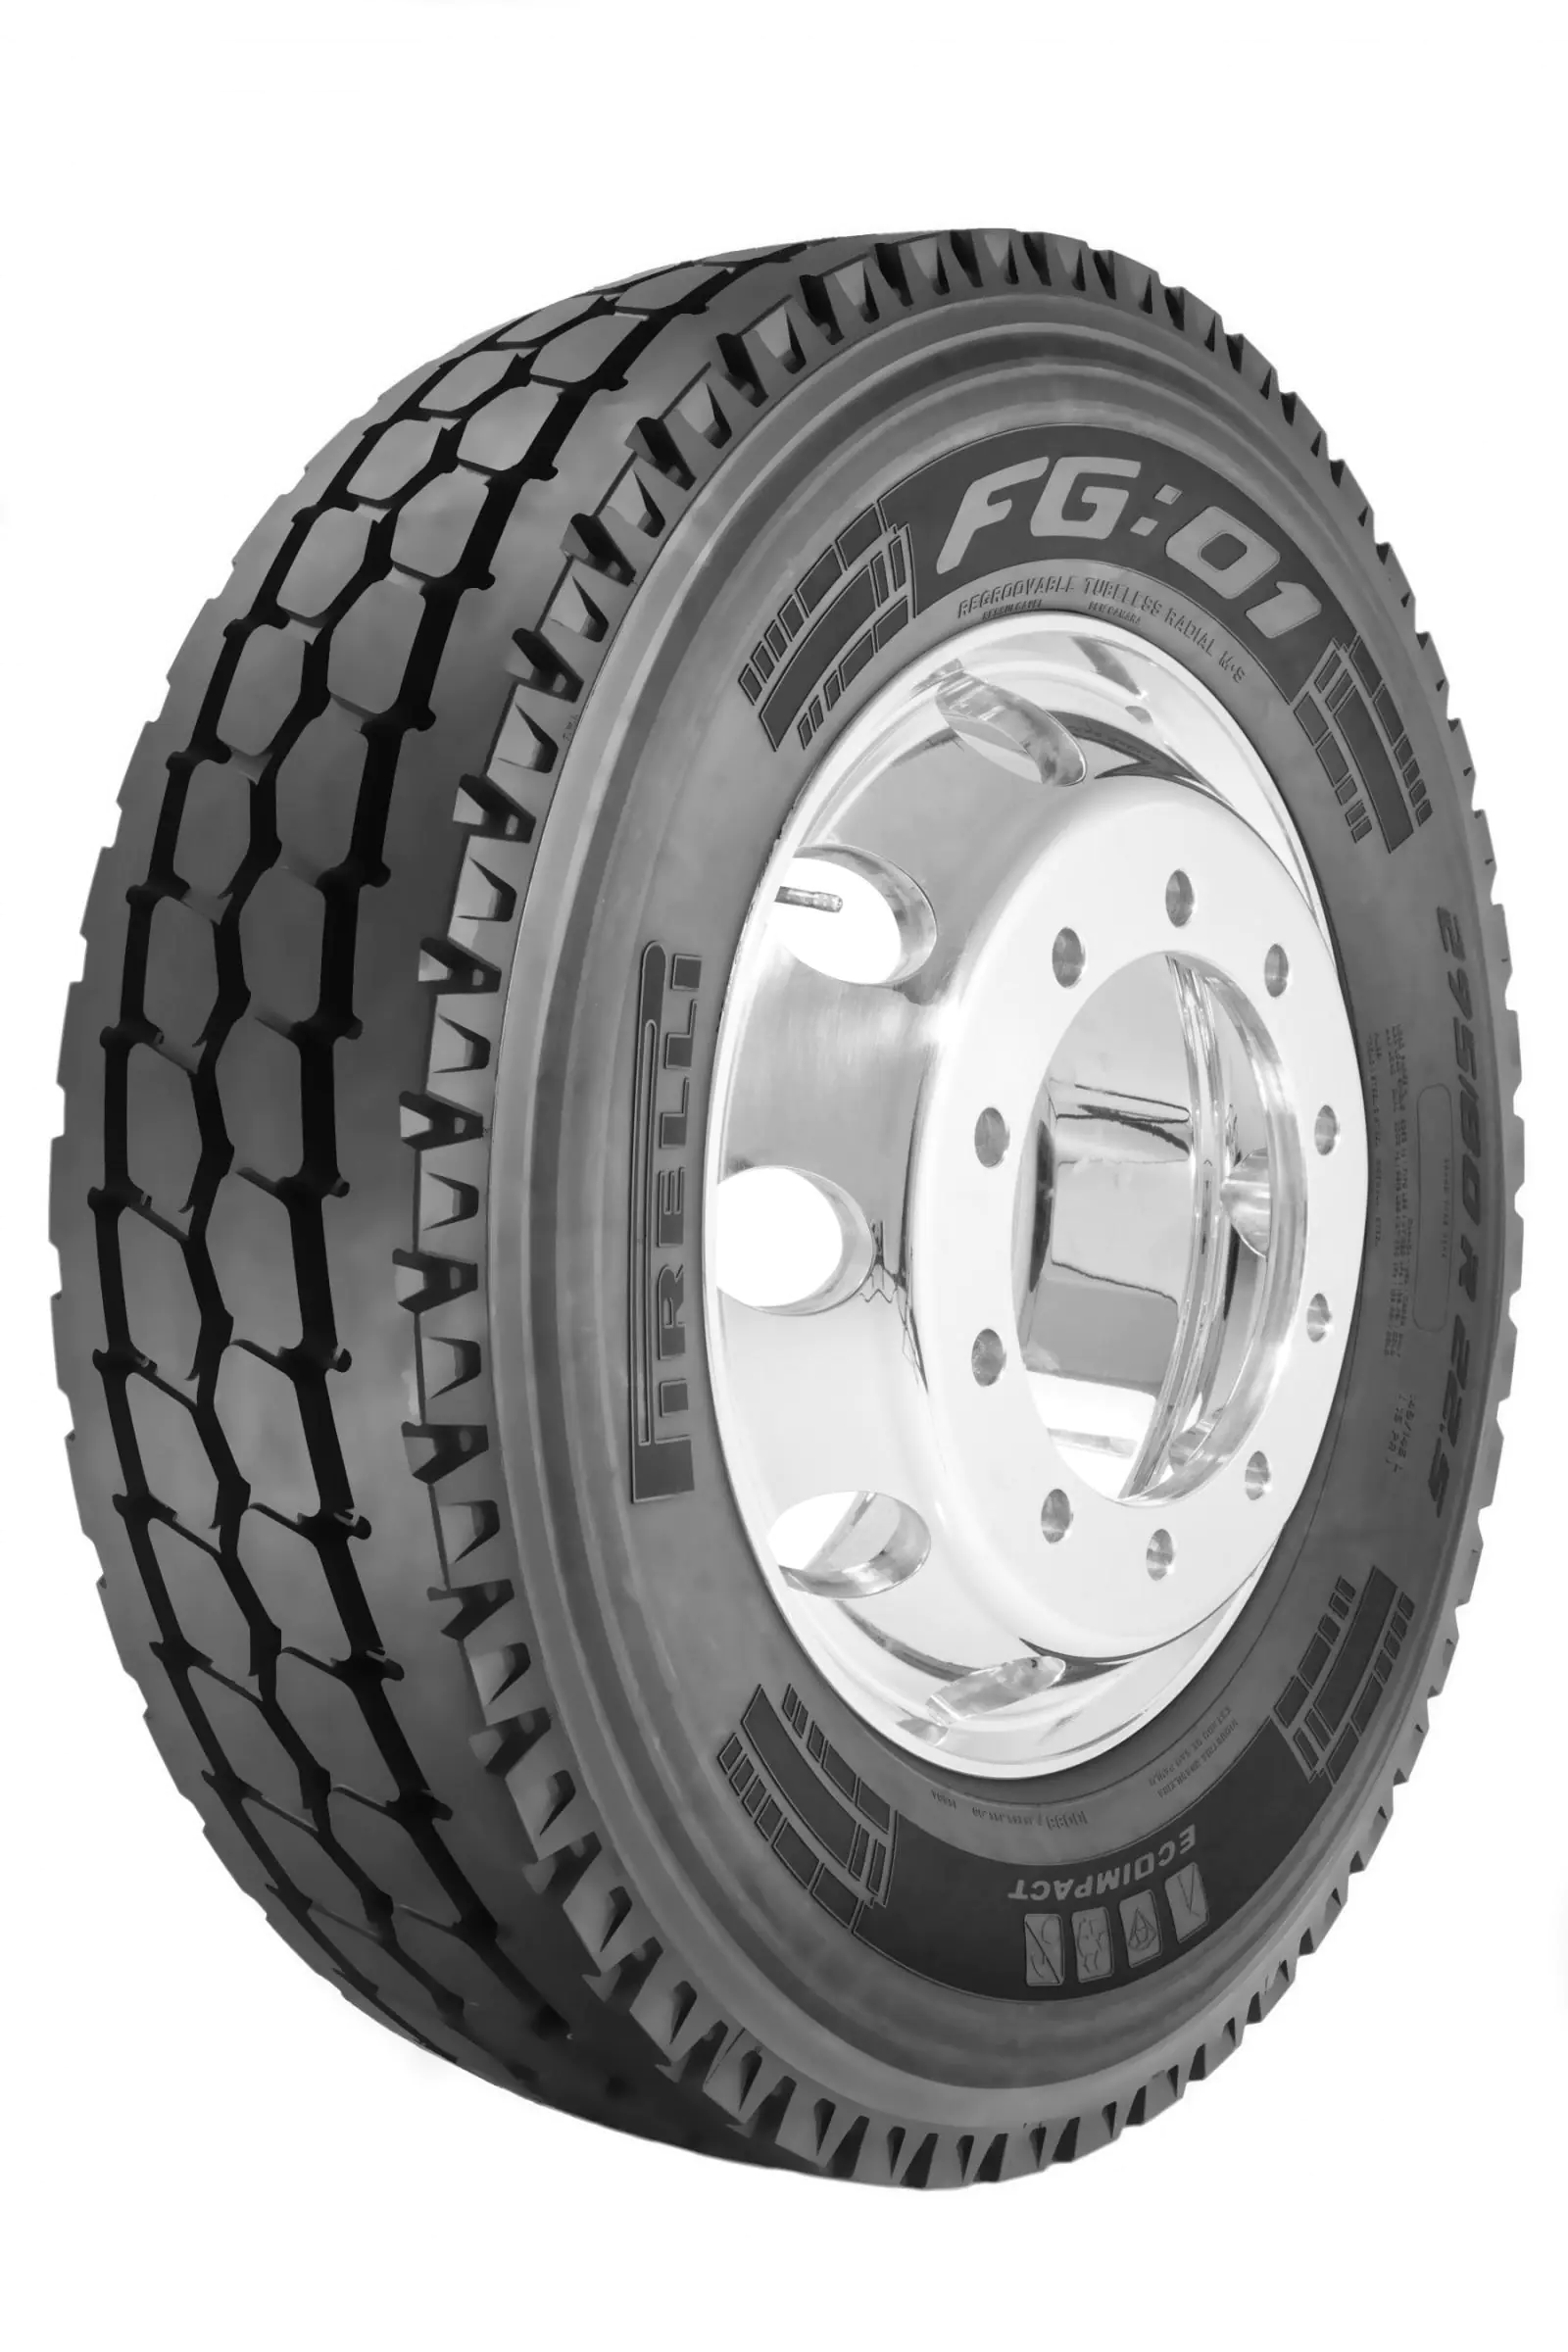 Pirelli Pirelli 315/80 R22.5 156K Fg01s pneumatici nuovi Estivo 